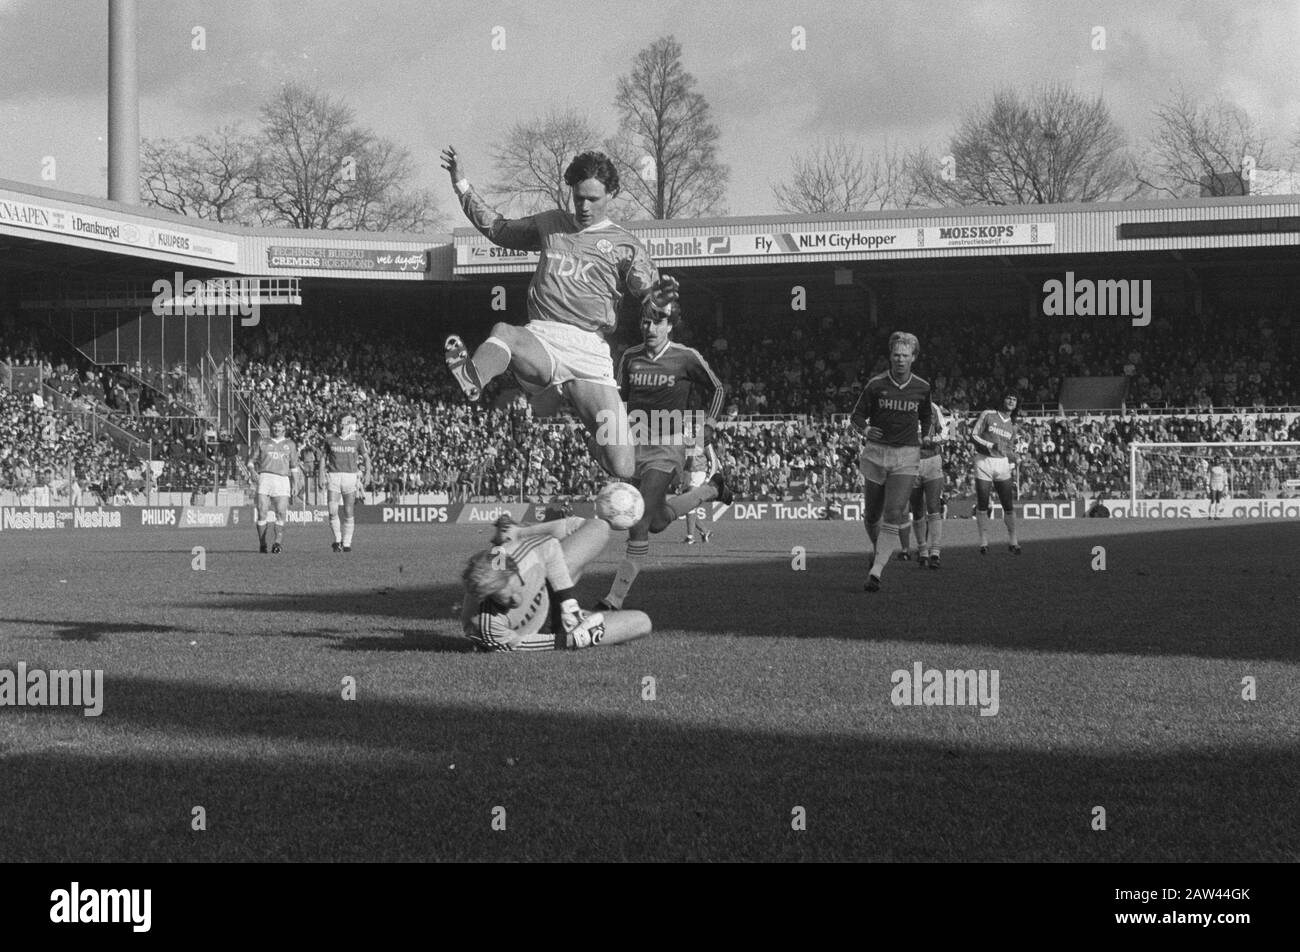 PSV against Ajax 1-0; Van Basten jumps over goalkeeper Van Breukelen Date: March 29, 1987 Keywords: goalies, sports, football Person Name: Basten, Marco van Stock Photo